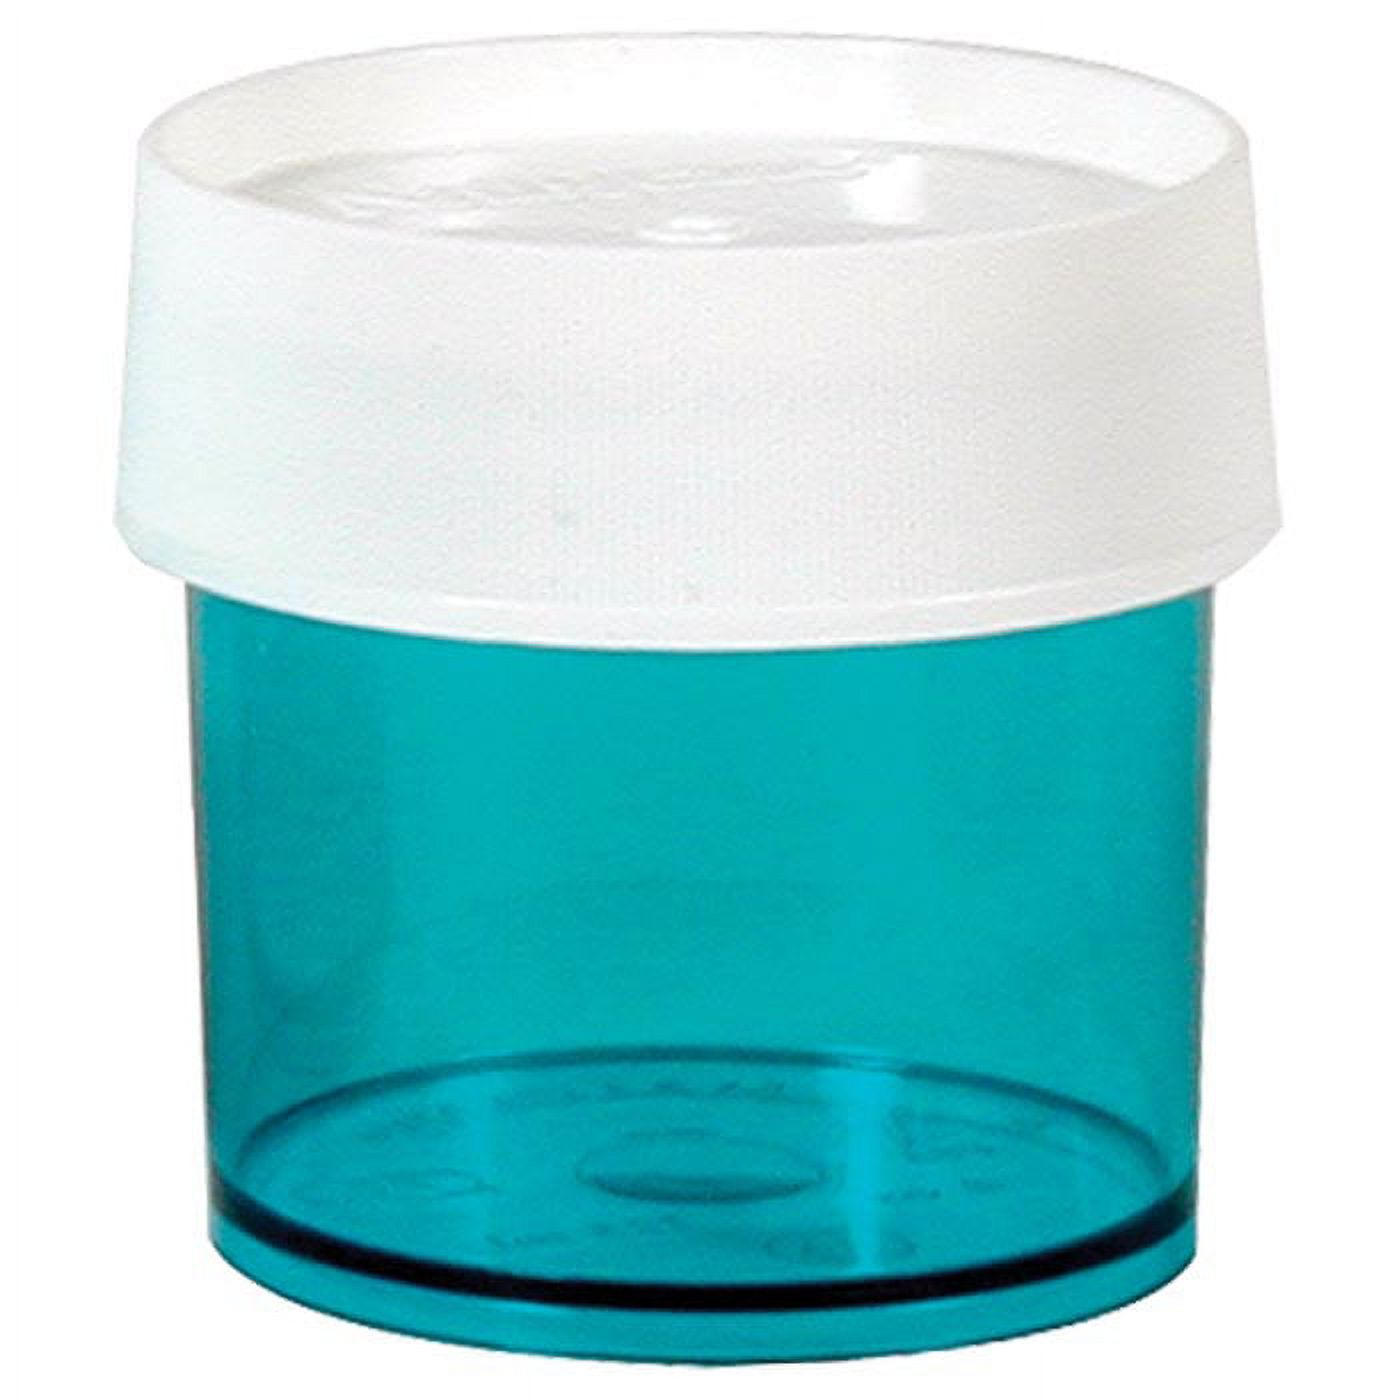 Nalgene Polypropylene Wide Mouth Storage Jar - 4 oz. - Clear - image 2 of 7